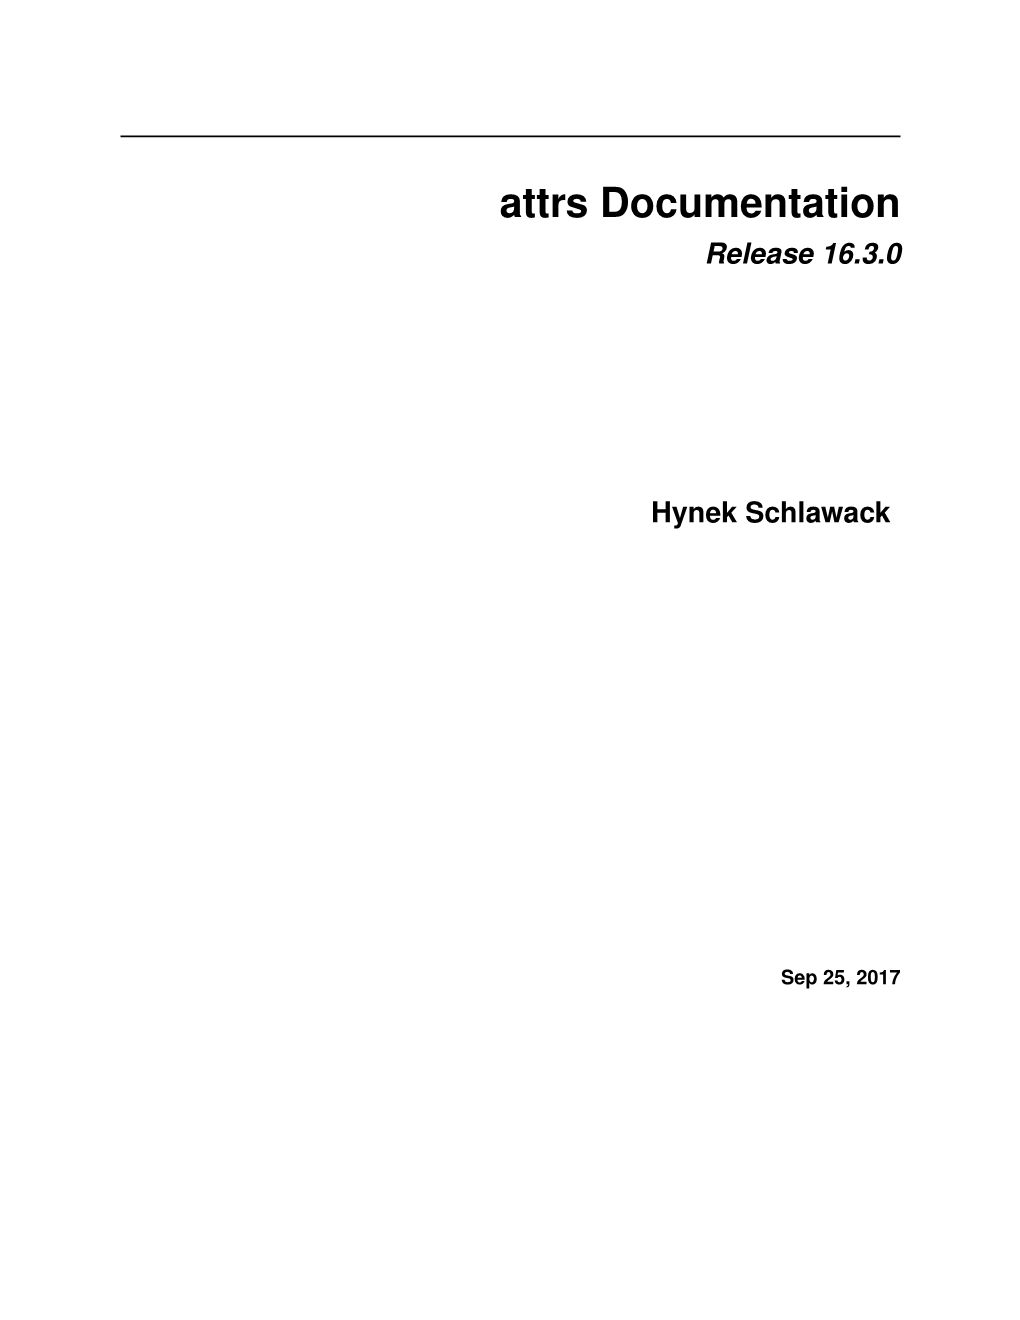 Attrs Documentation Release 16.3.0